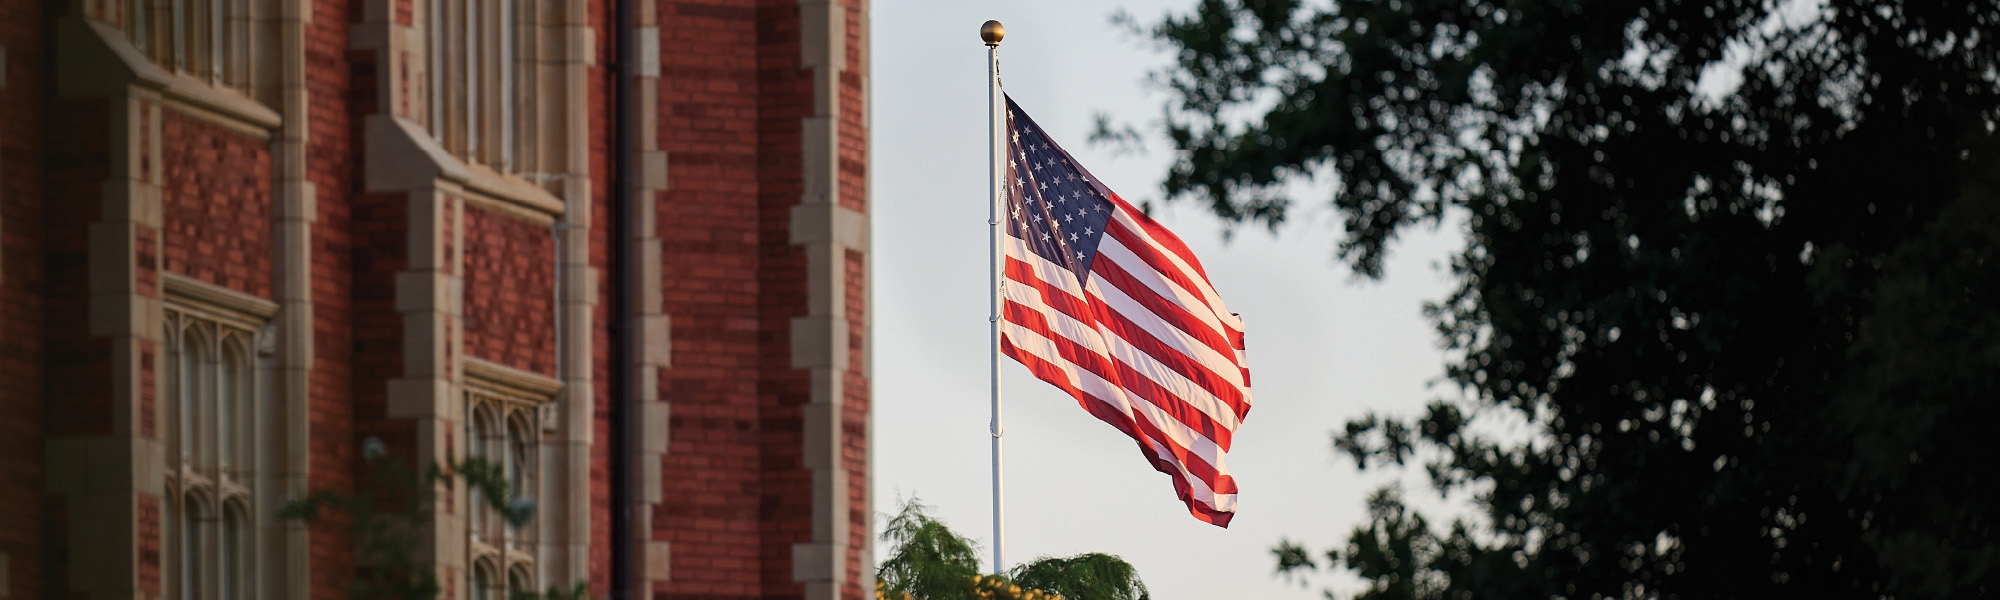 United States flag flying over University of Oklahoma campus.